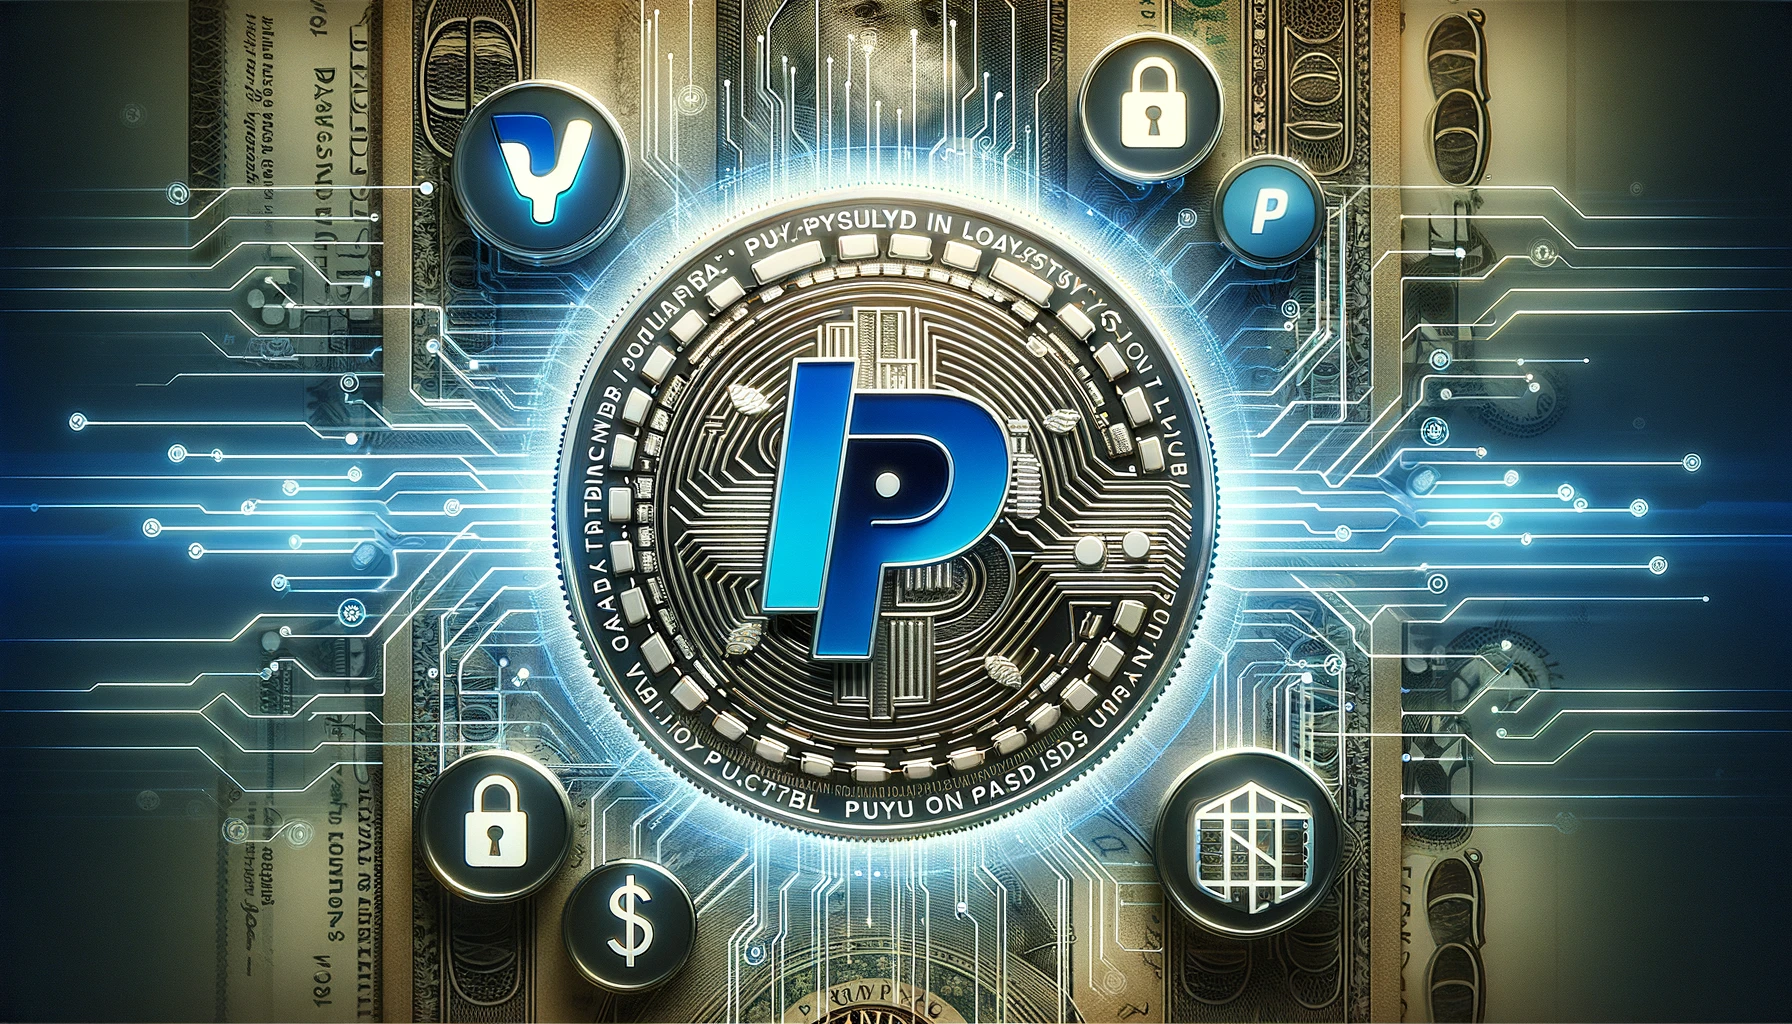 PayPal breidt stablecoin PYUSD uit naar Solana-blockchain